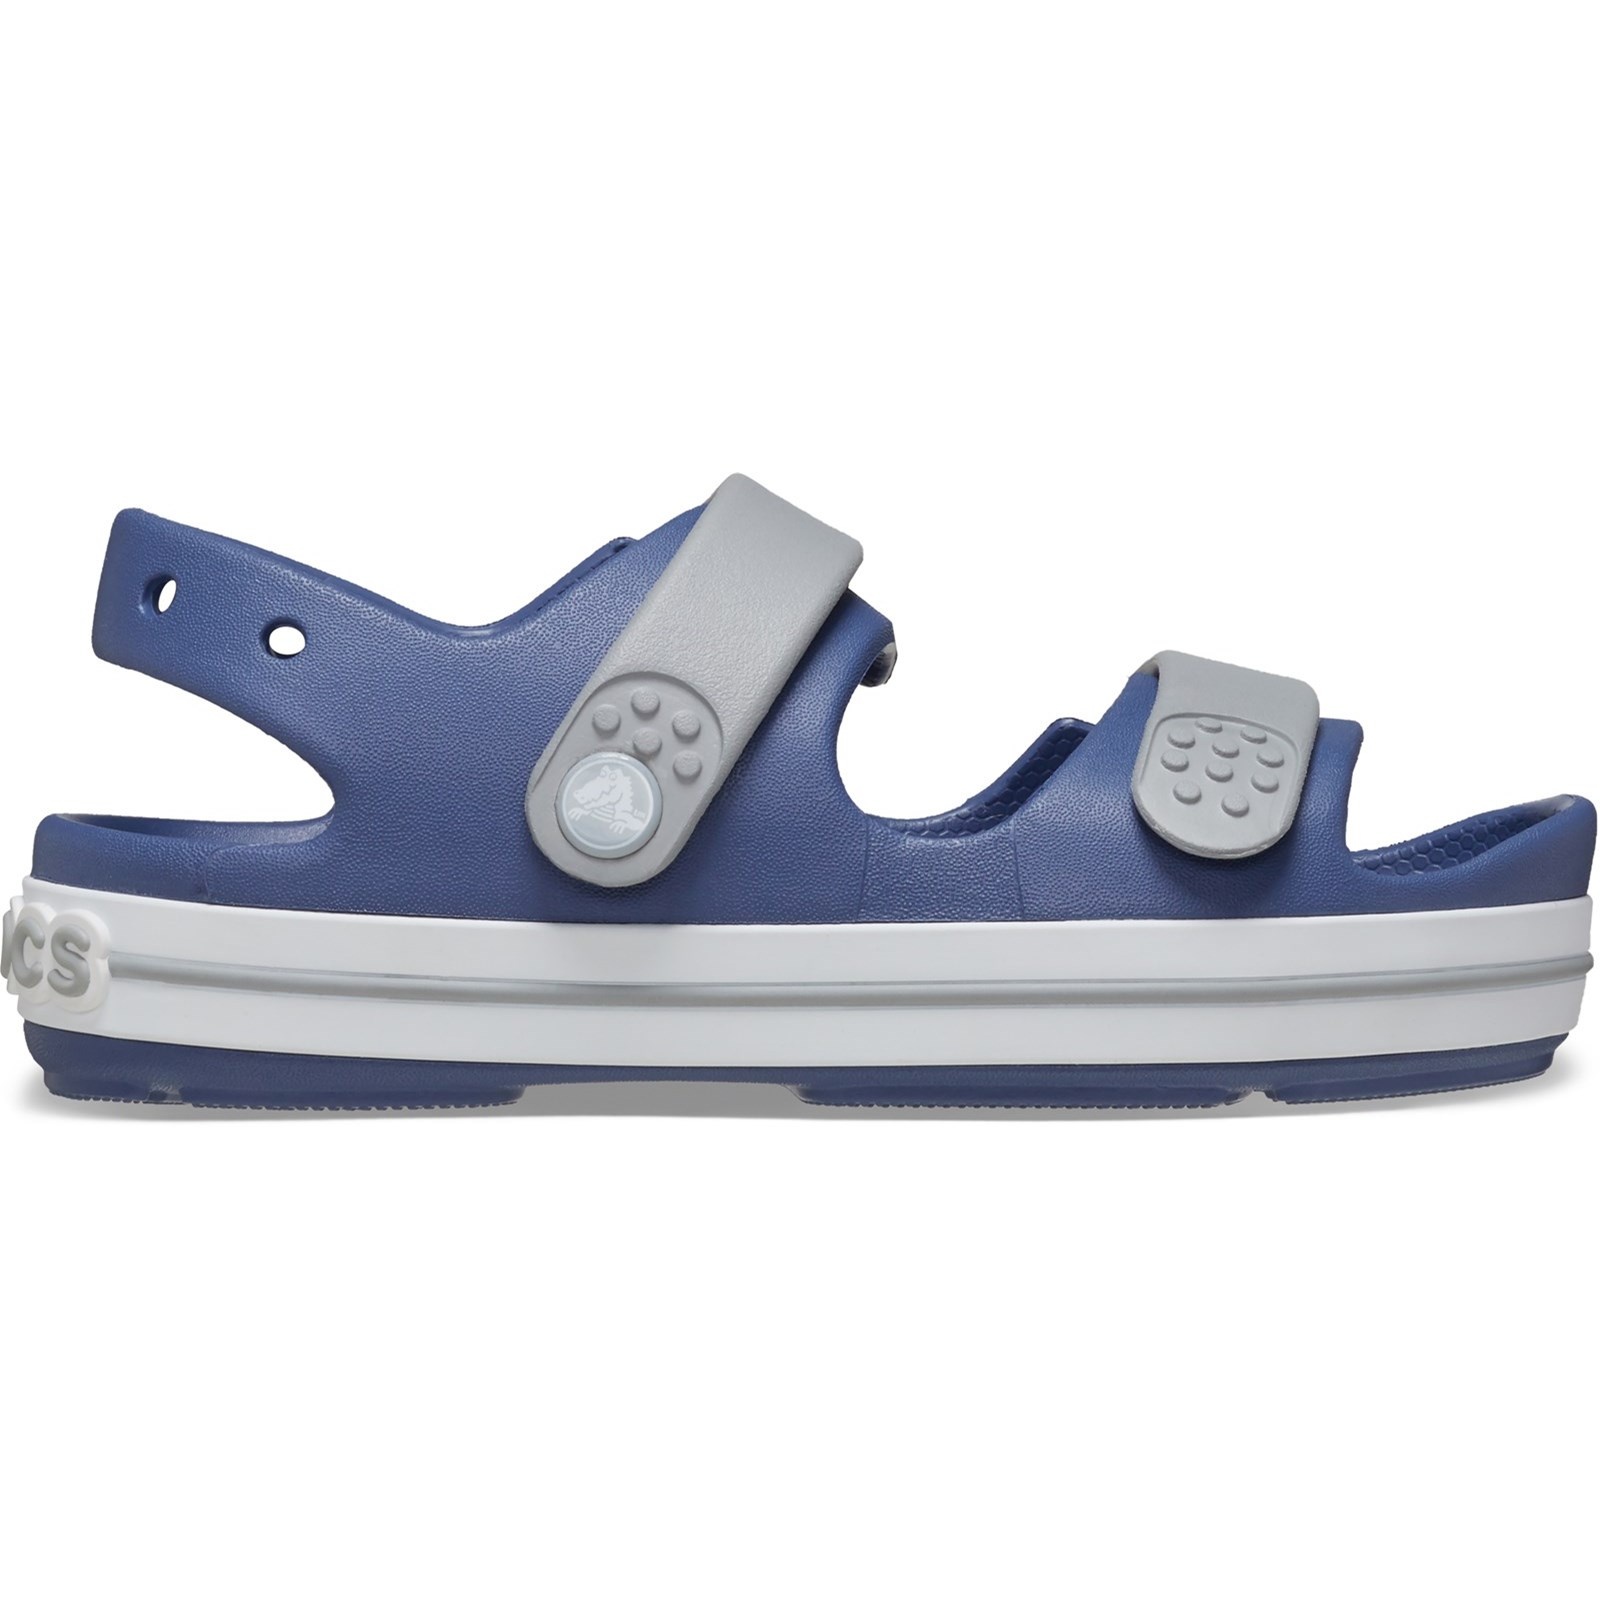 Crocs Cruiser Sandal Kids Blue Light Grey